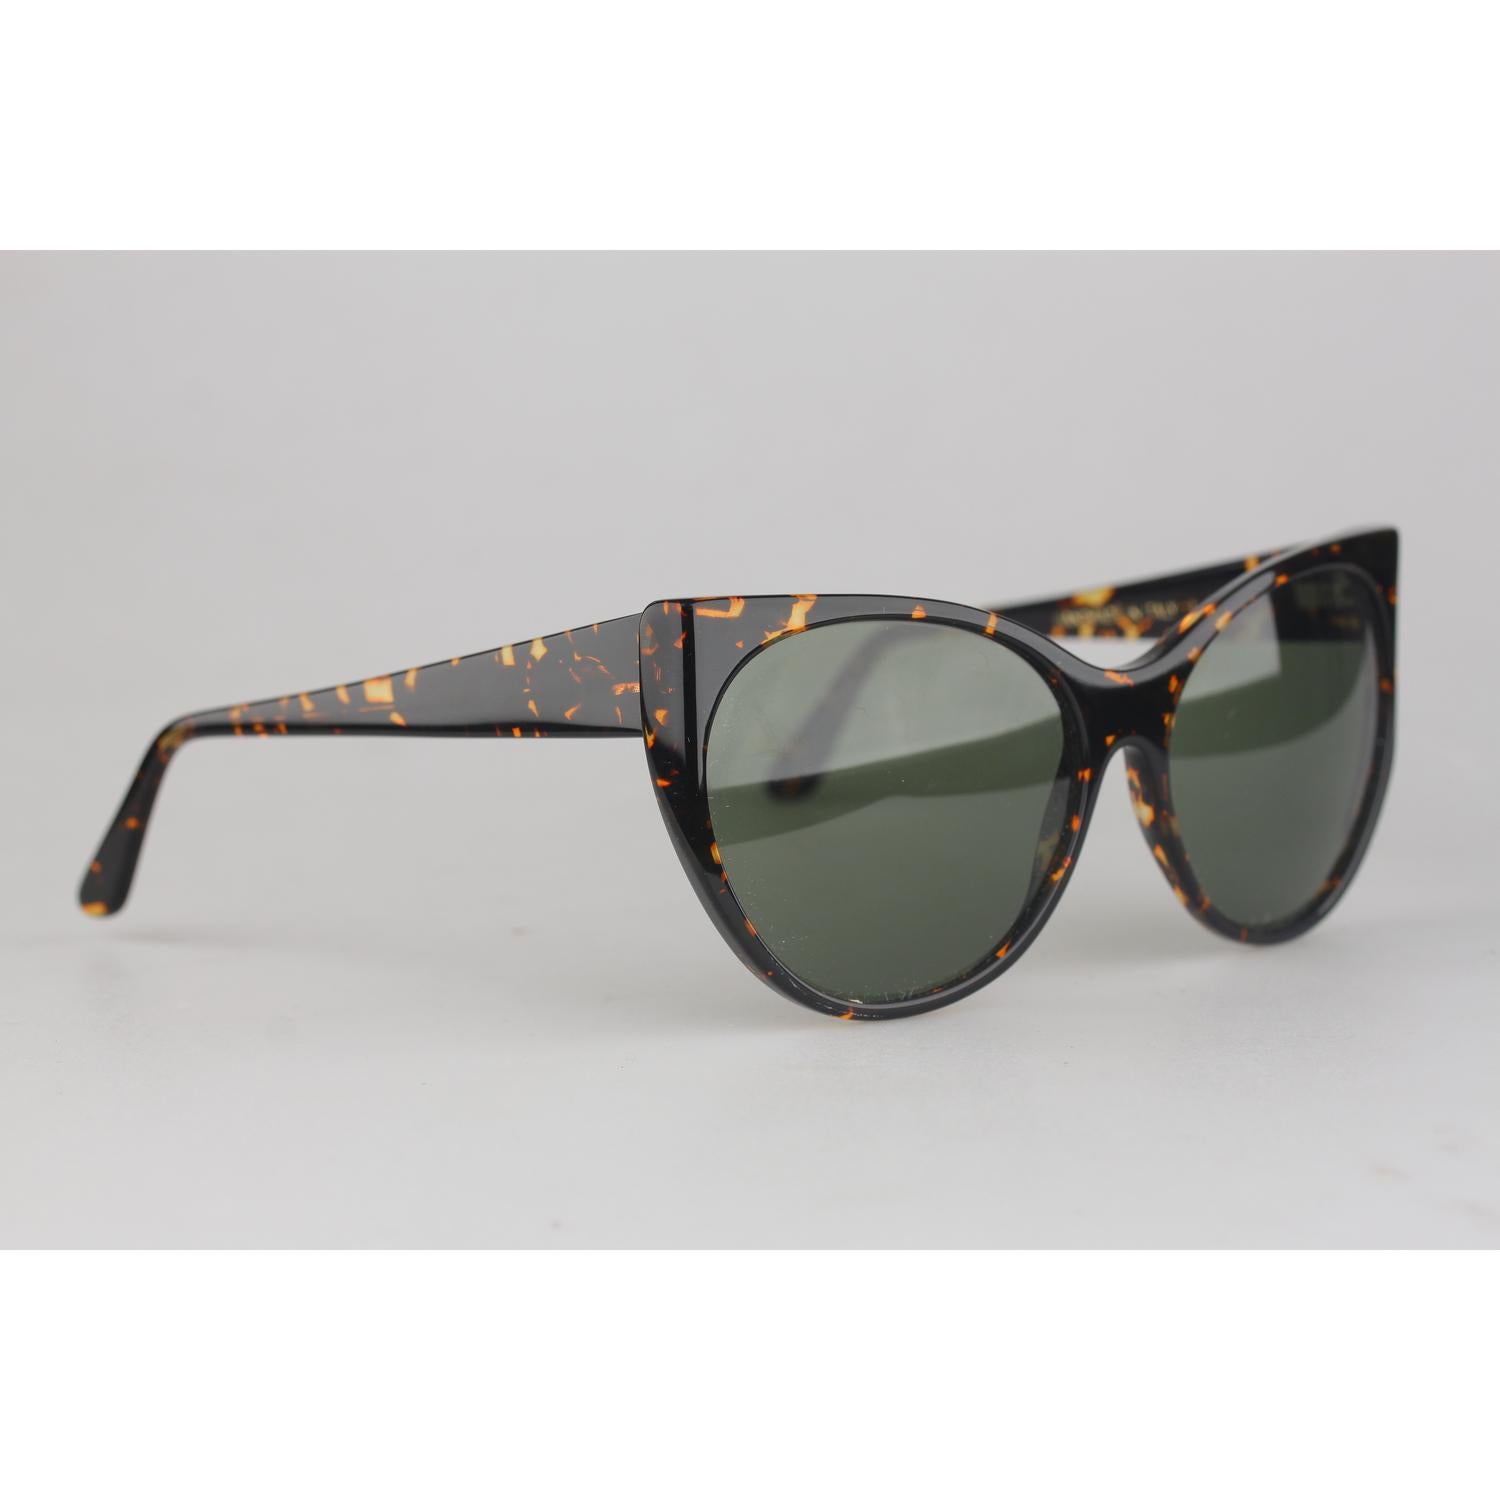 Black L.G.R. Matt Brown Sunglasses Mod Carthago Polarized Lens New Old Stock